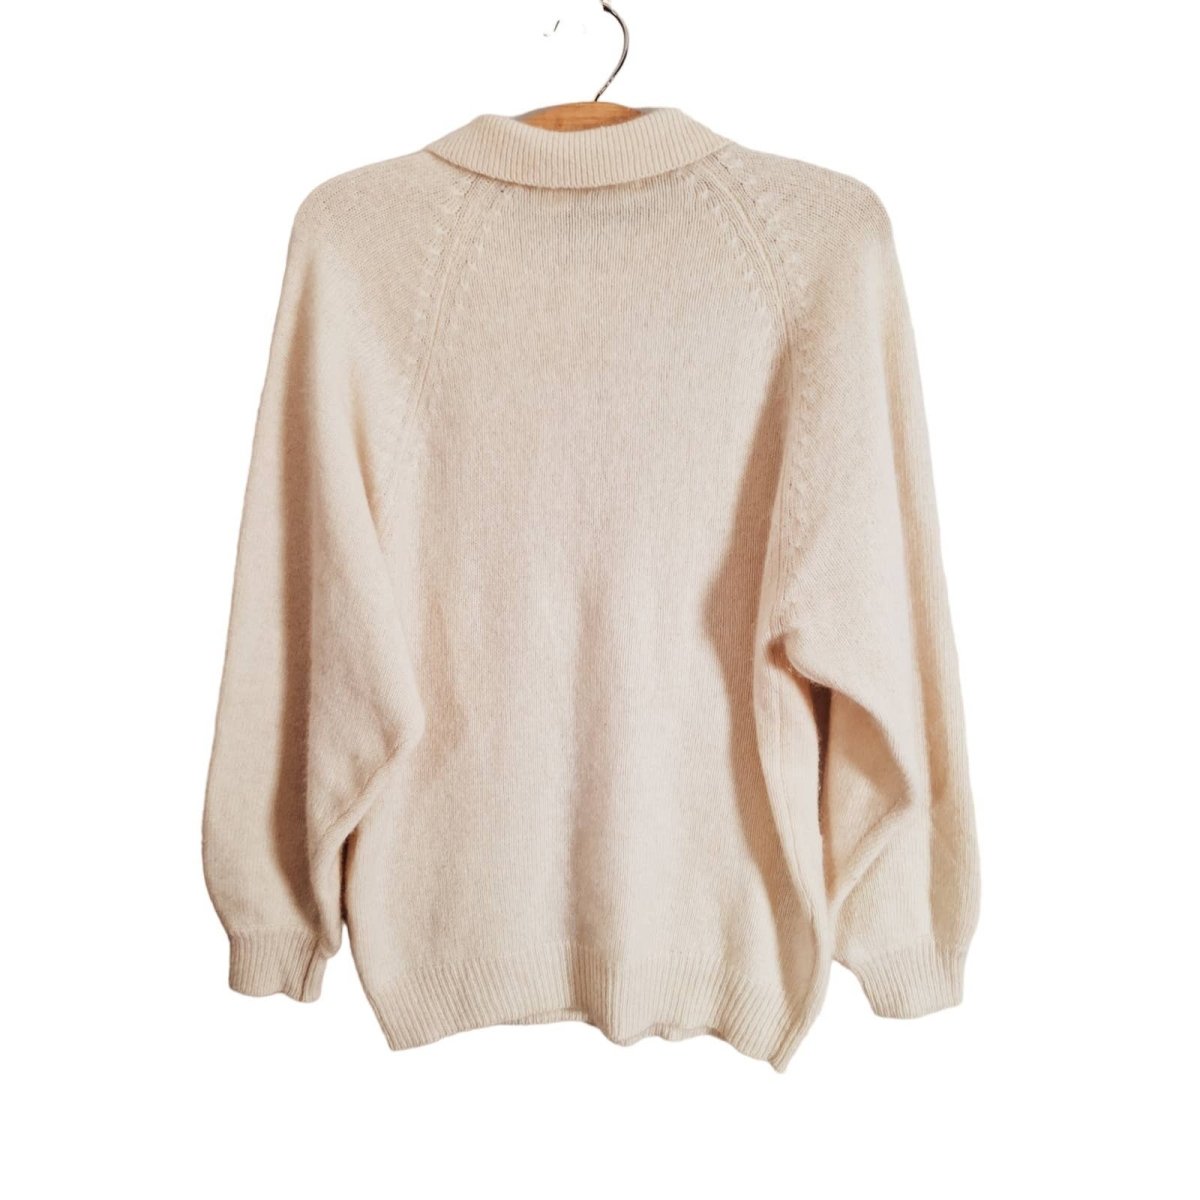 Vintage Angora/Lamb's Wool Collared Sweater Women's Size Medium - themallvintage The Mall Vintage